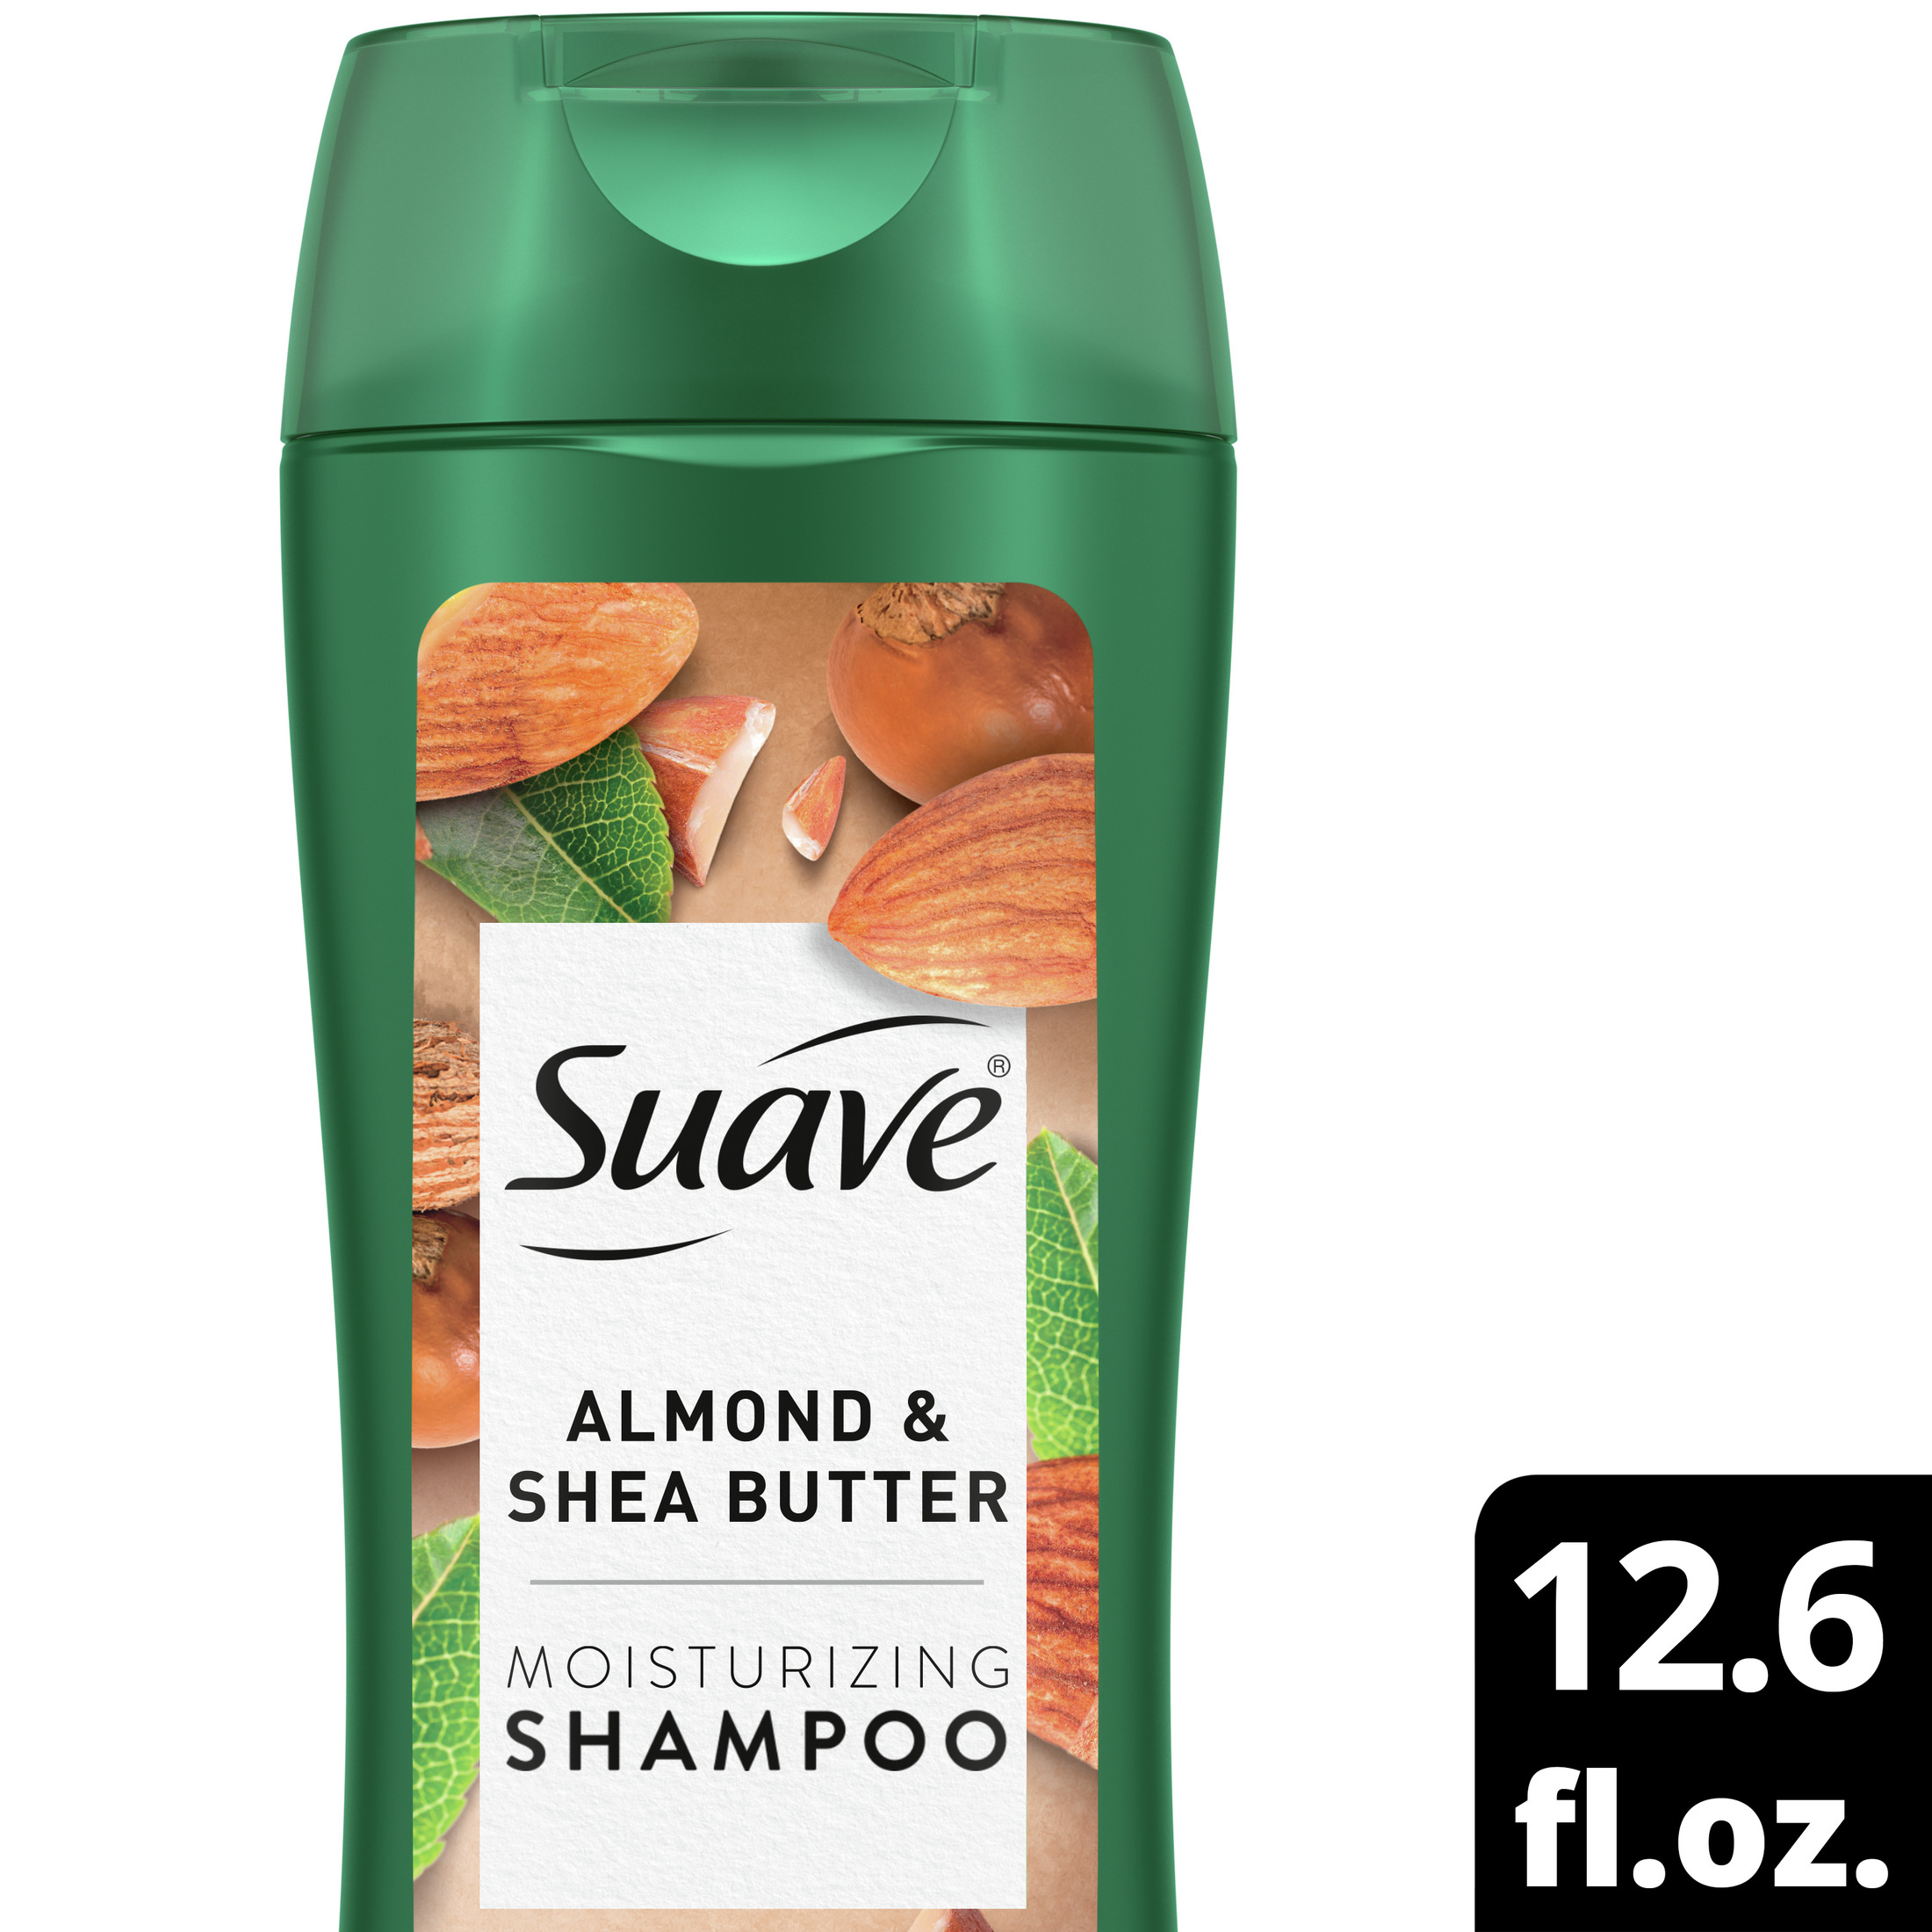 Suave Professional Moisturizing Shampoo, Almond & Shea Butter, 12.6 fl oz - image 1 of 11